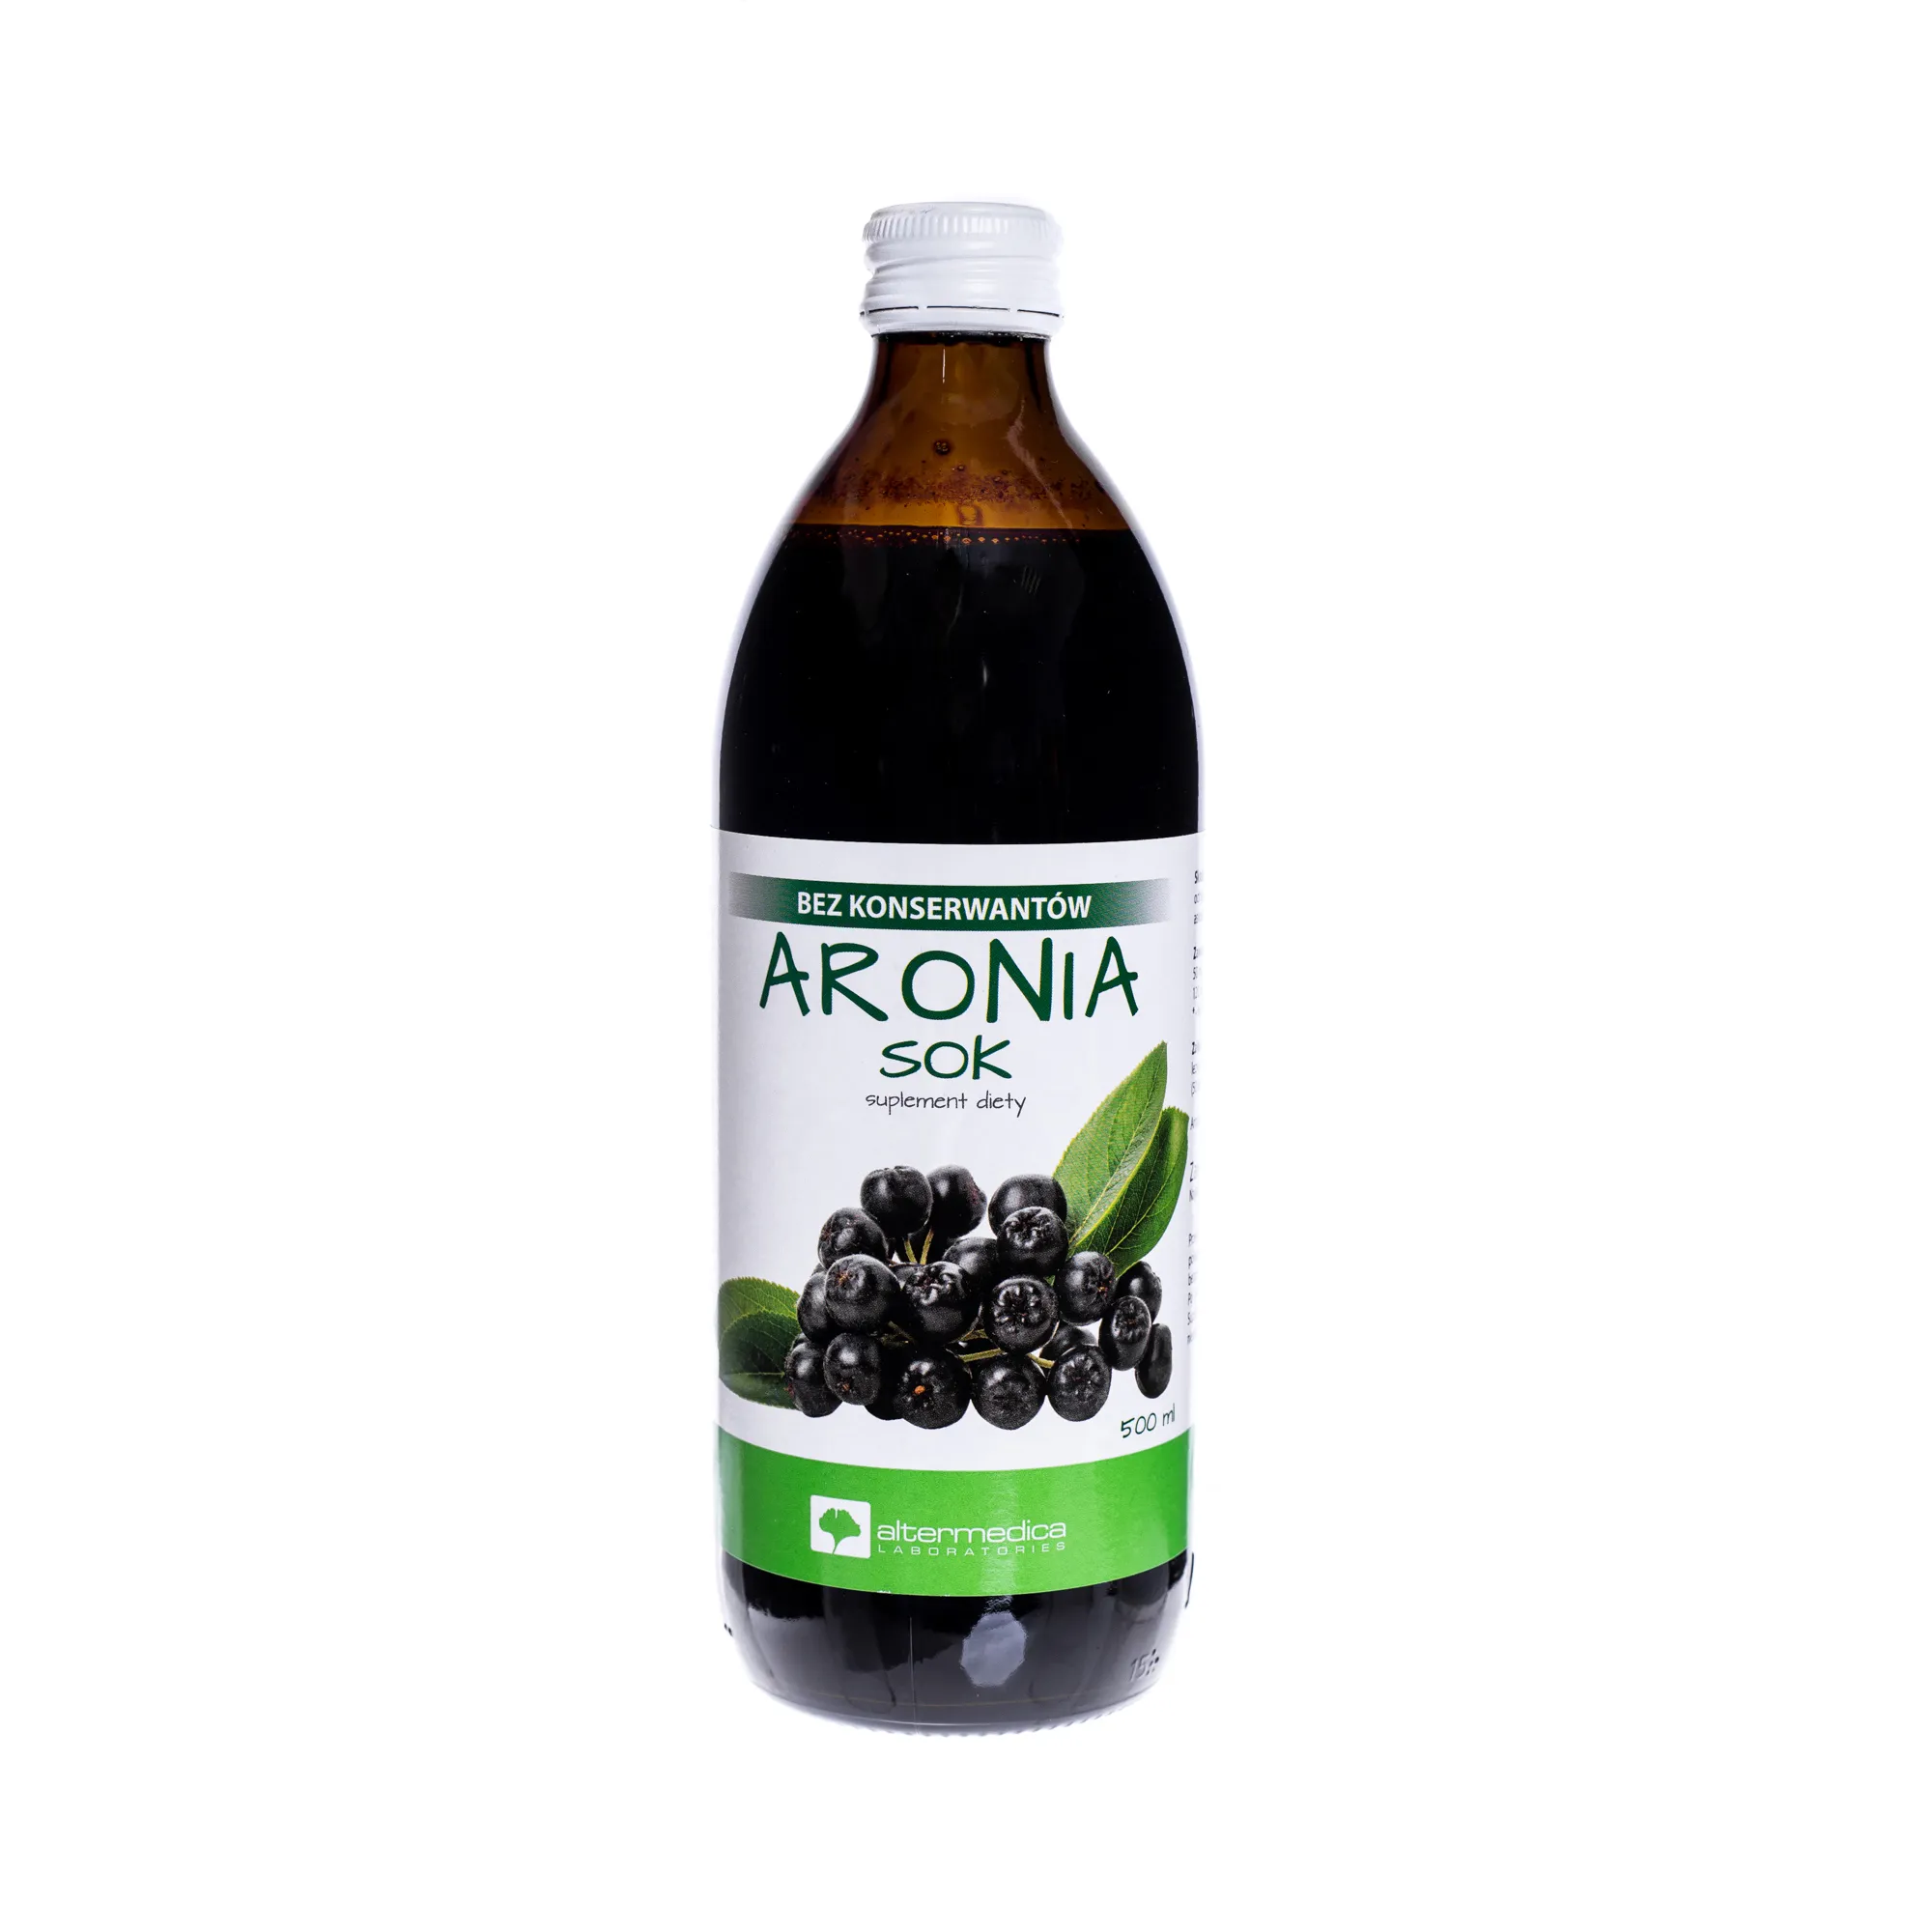 Aronia sok, suplement diety, 500 ml